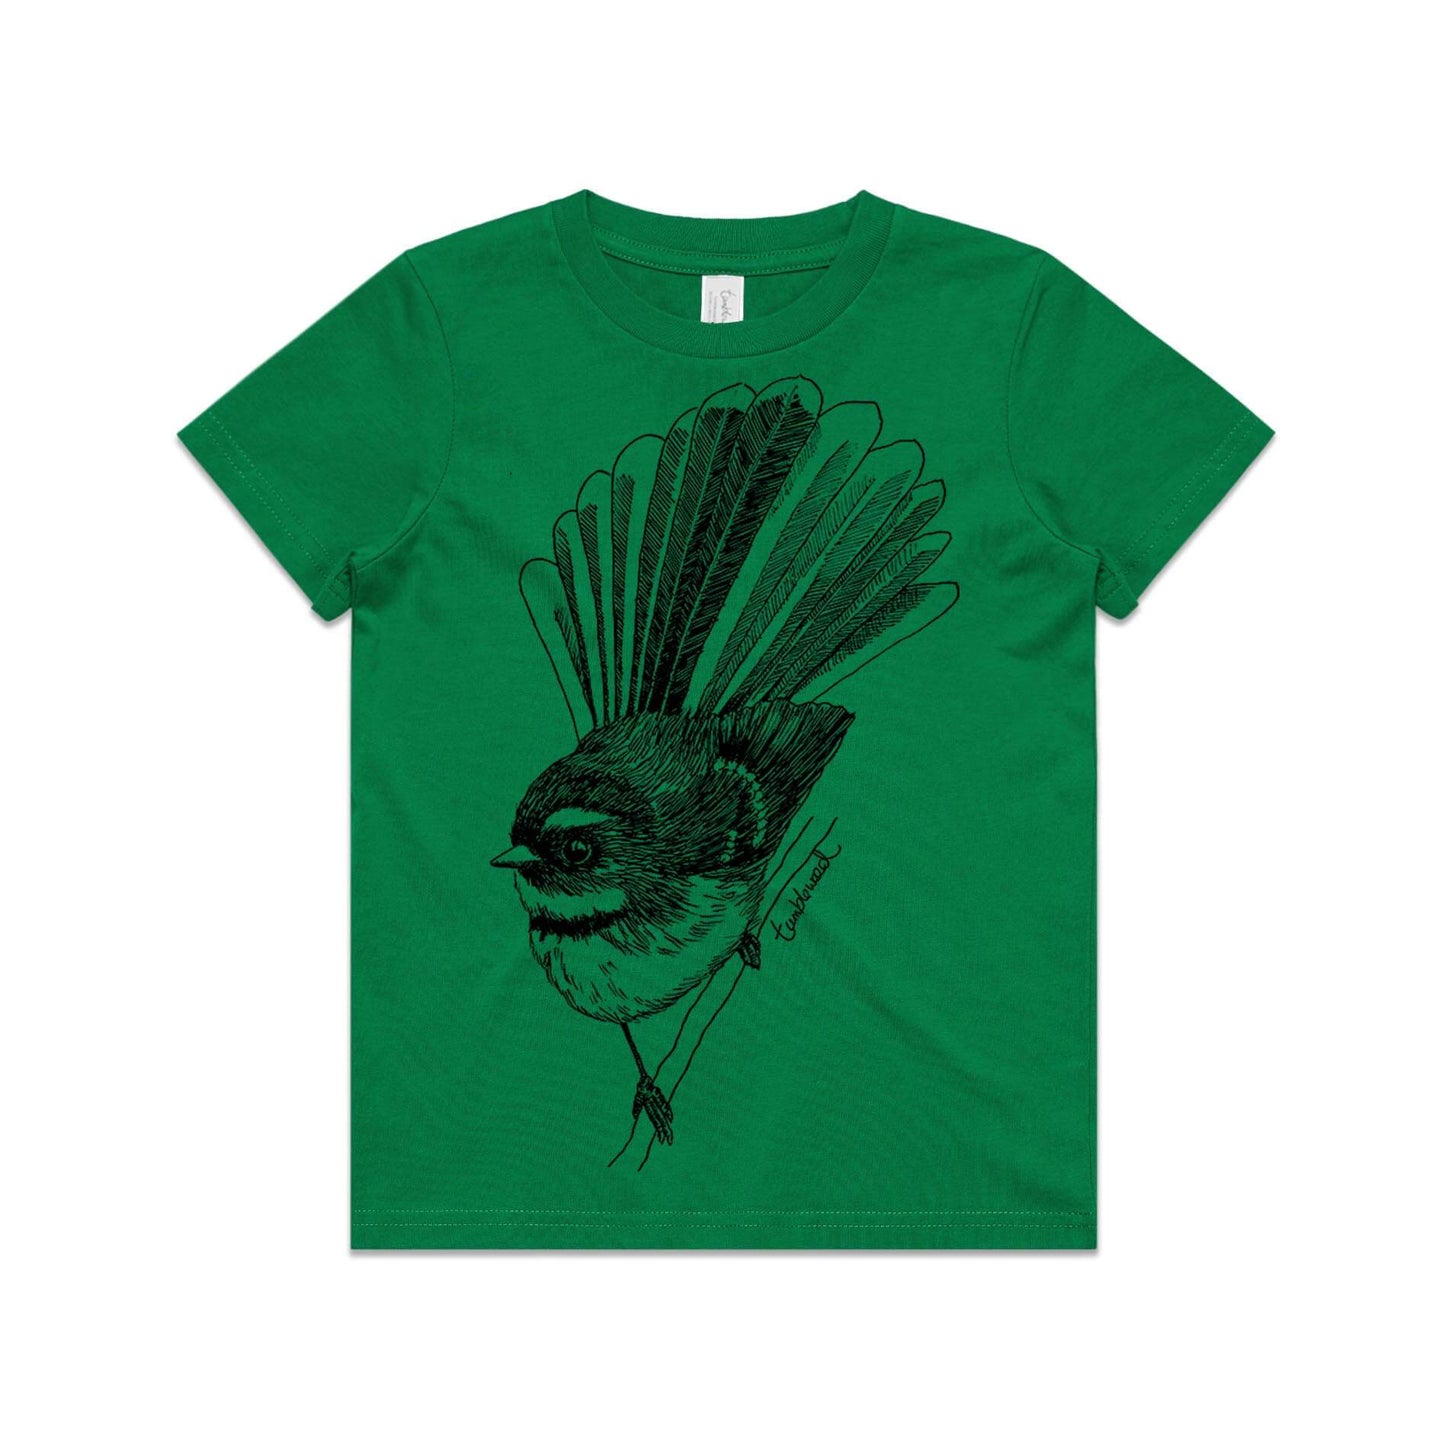 Green, cotton kids' t-shirt with screen printed fantail/piwakawaka design.